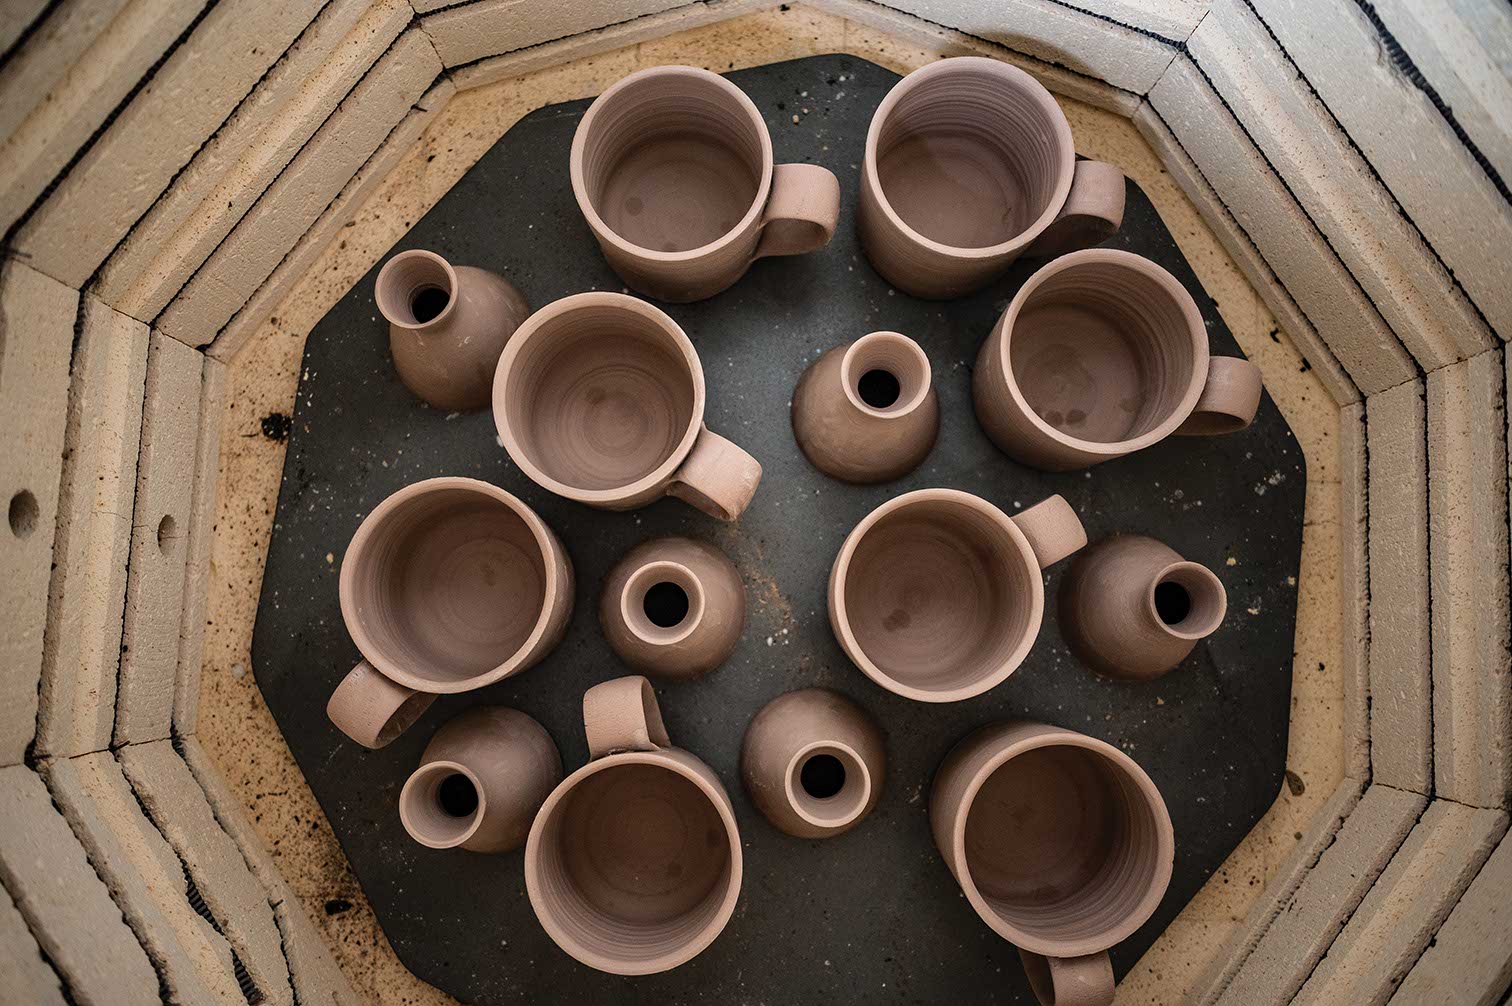 Ceramics made in SWFL